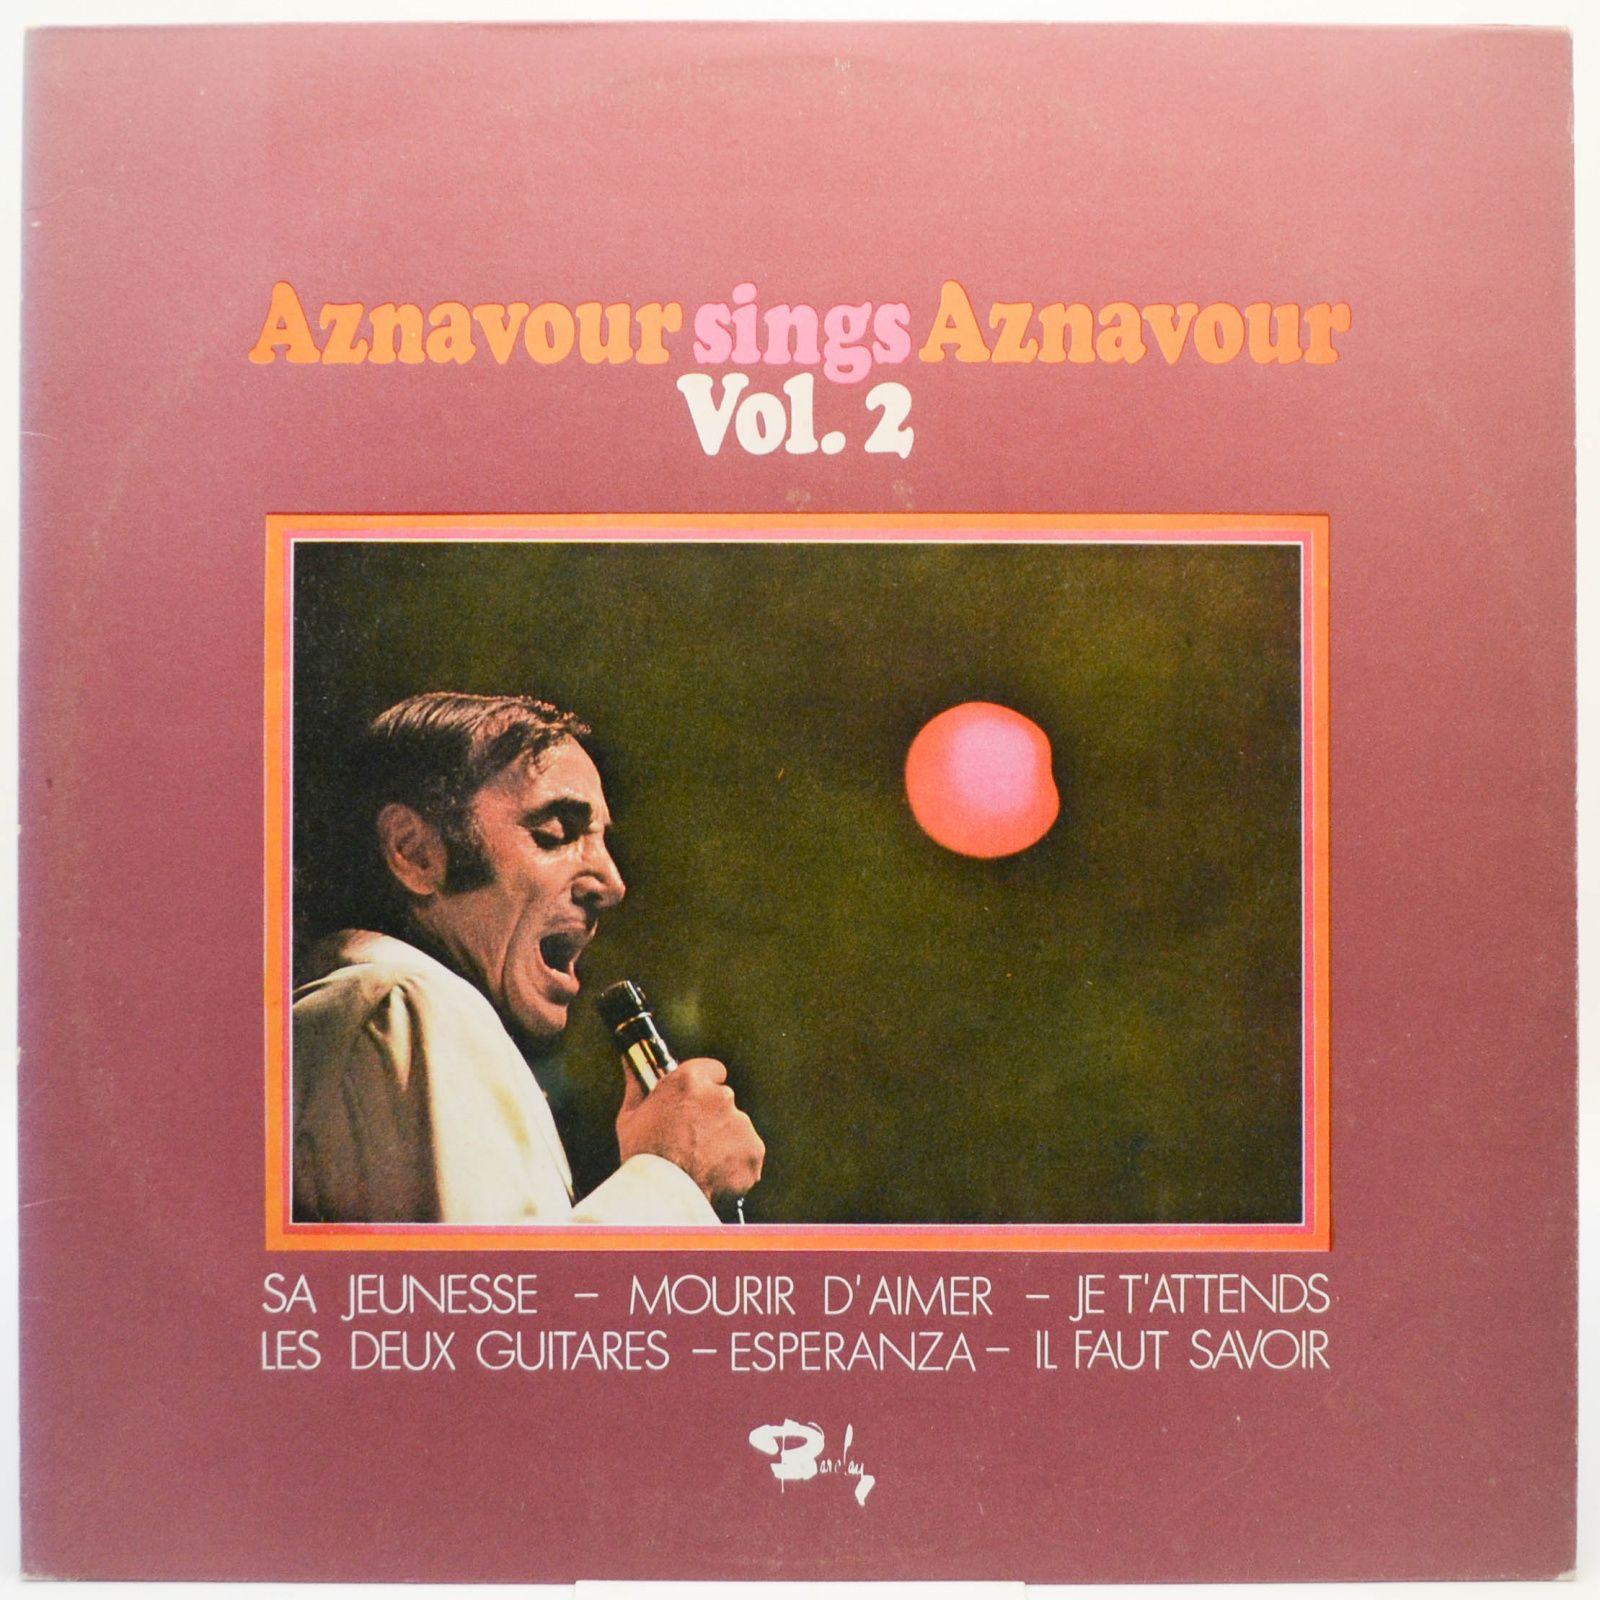 Aznavour Sings Aznavour Vol. 2, 1971